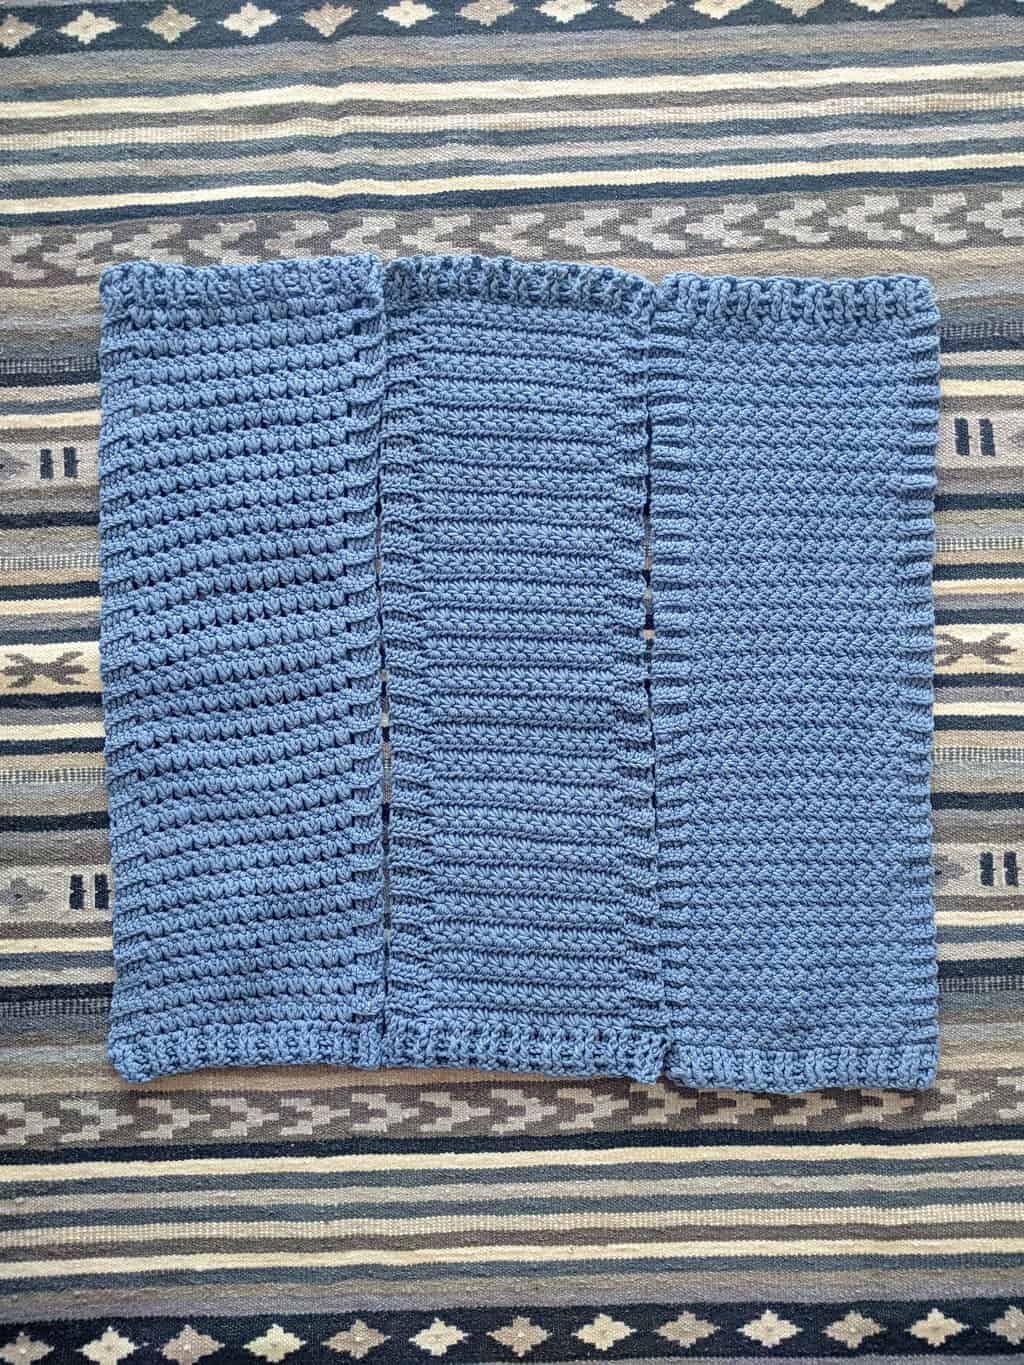 crochet hand towels